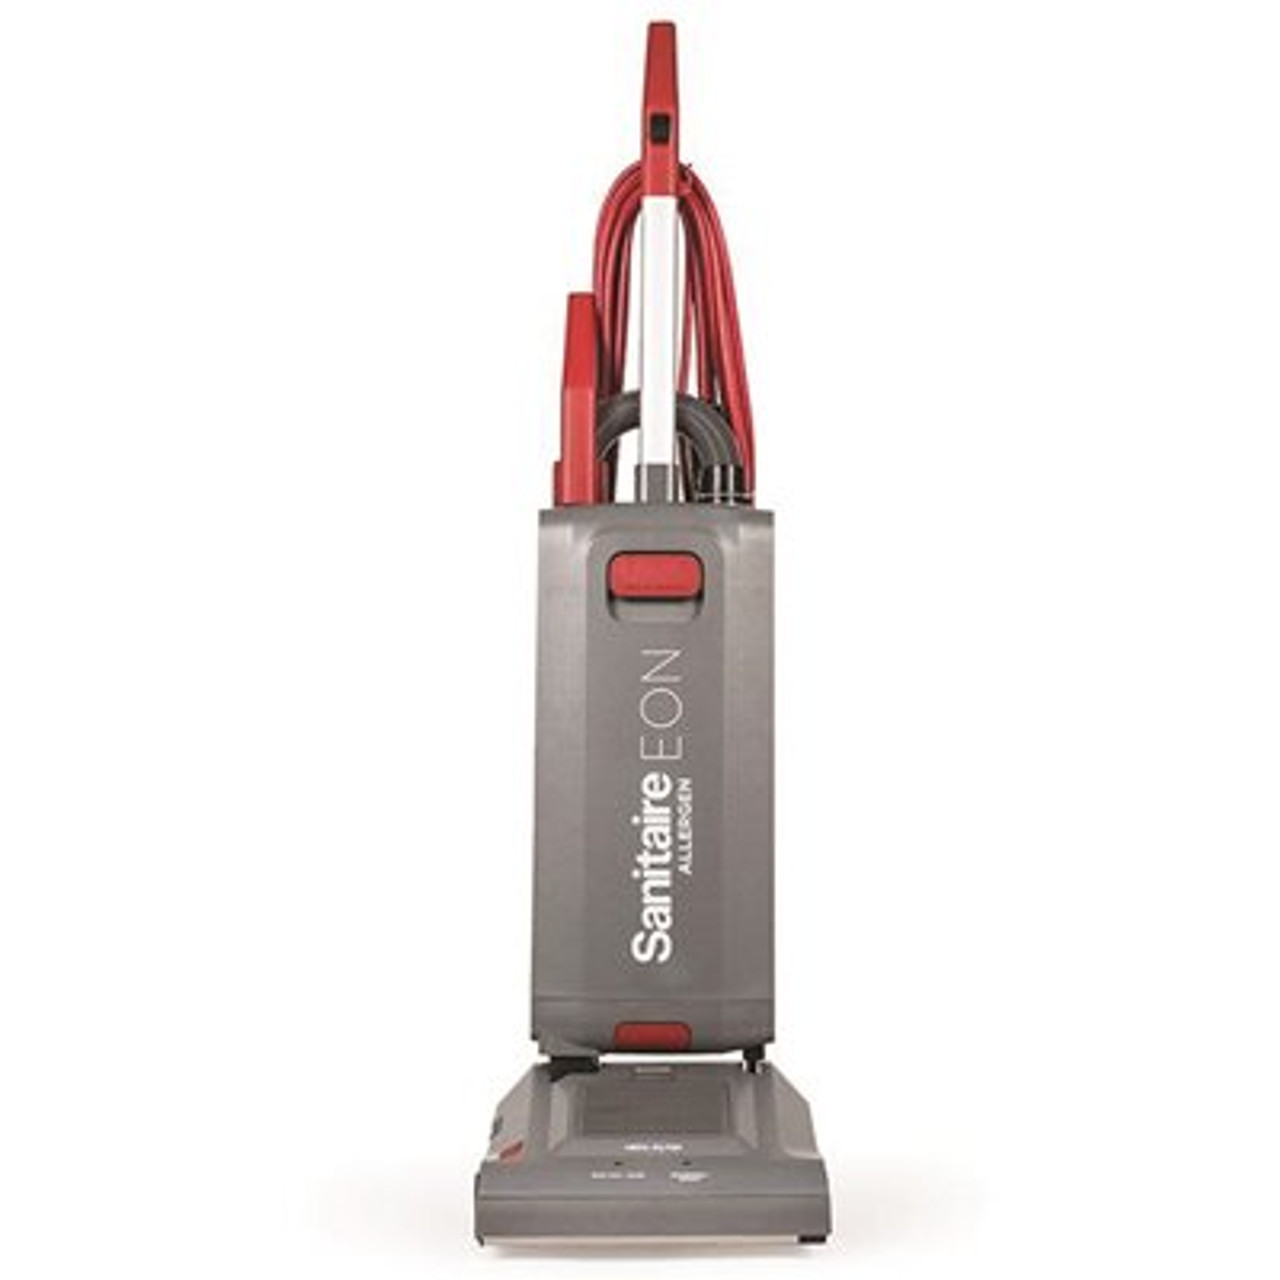 Sanitaire Eon Allergen Upright Vacuum Cleaner